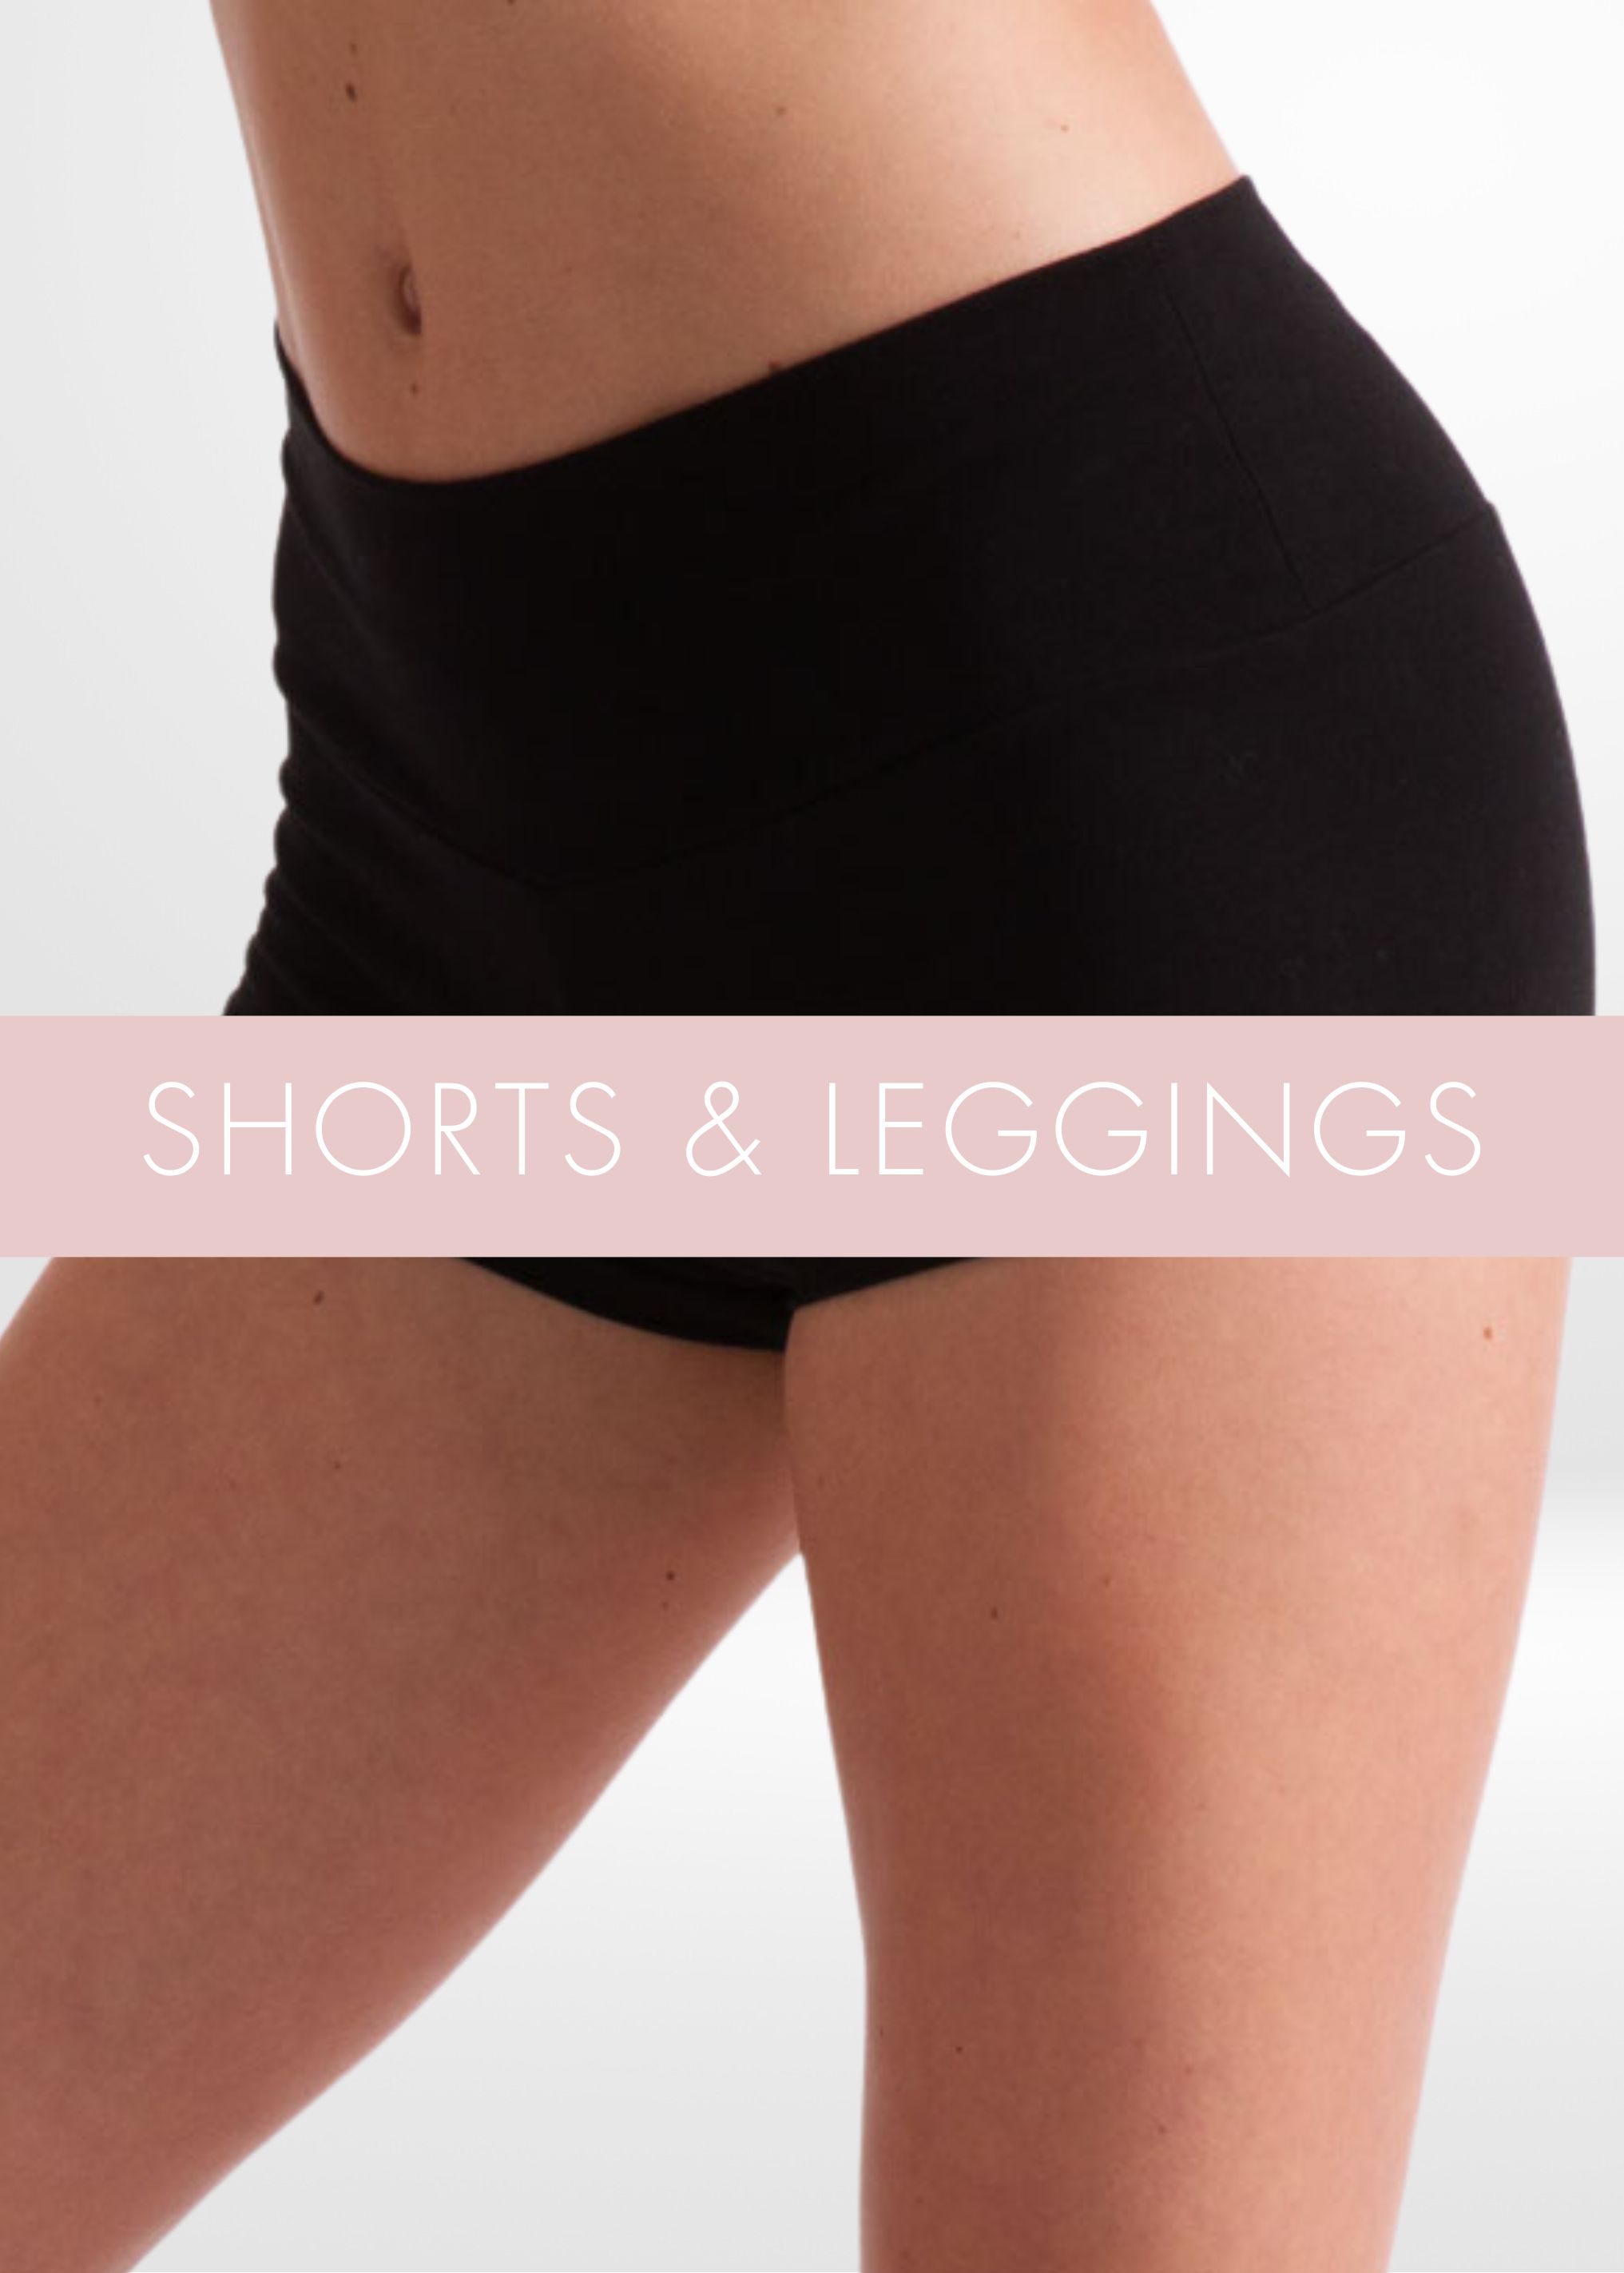 Leggings & Shorts